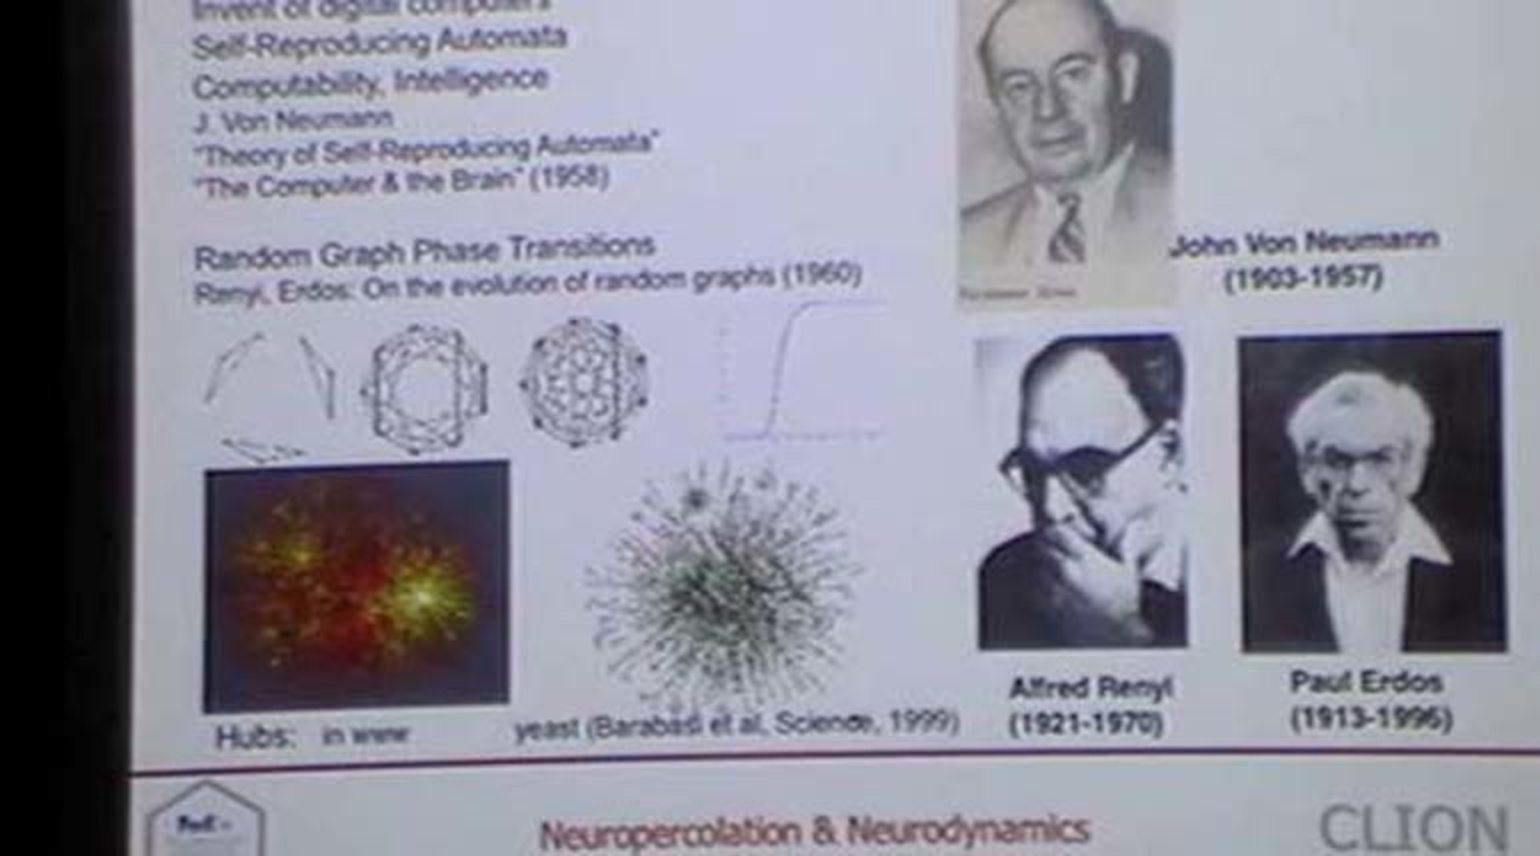 Walter J Freeman and Robert Kozma - Physical Basis of Intelligence